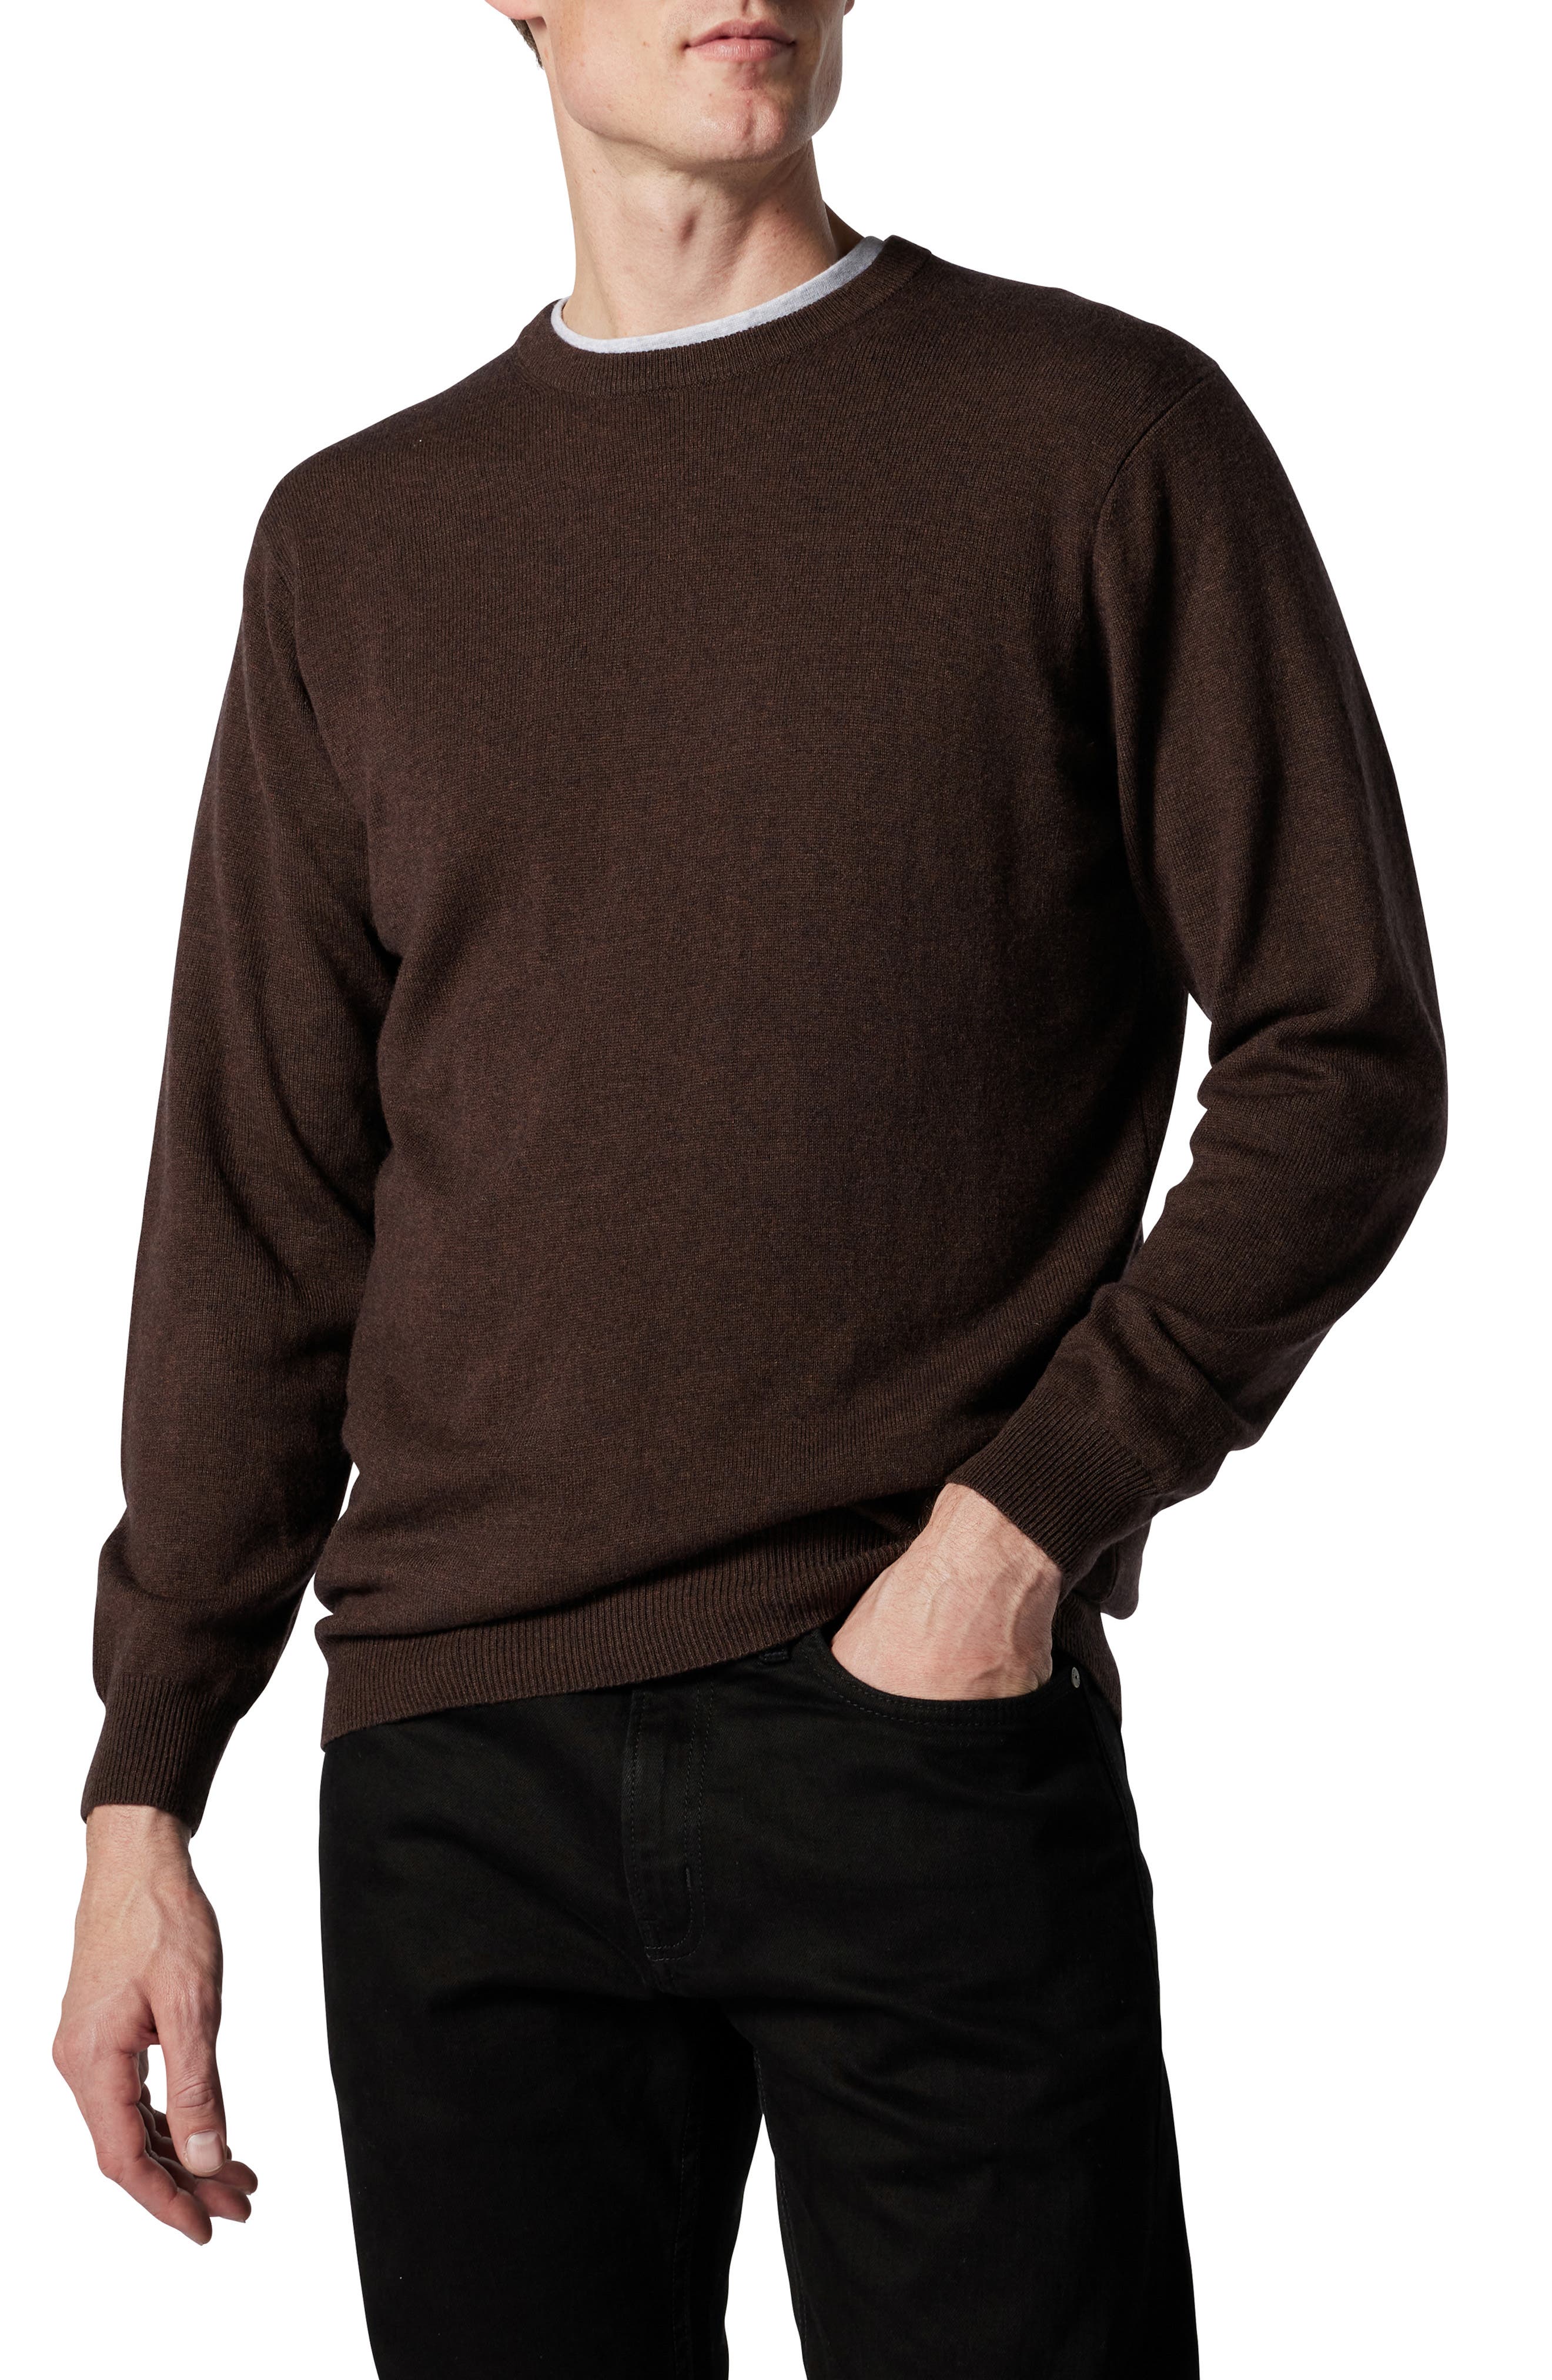 ONLY & SONS sweatshirt MEN FASHION Jumpers & Sweatshirts Sports Black L discount 56% 